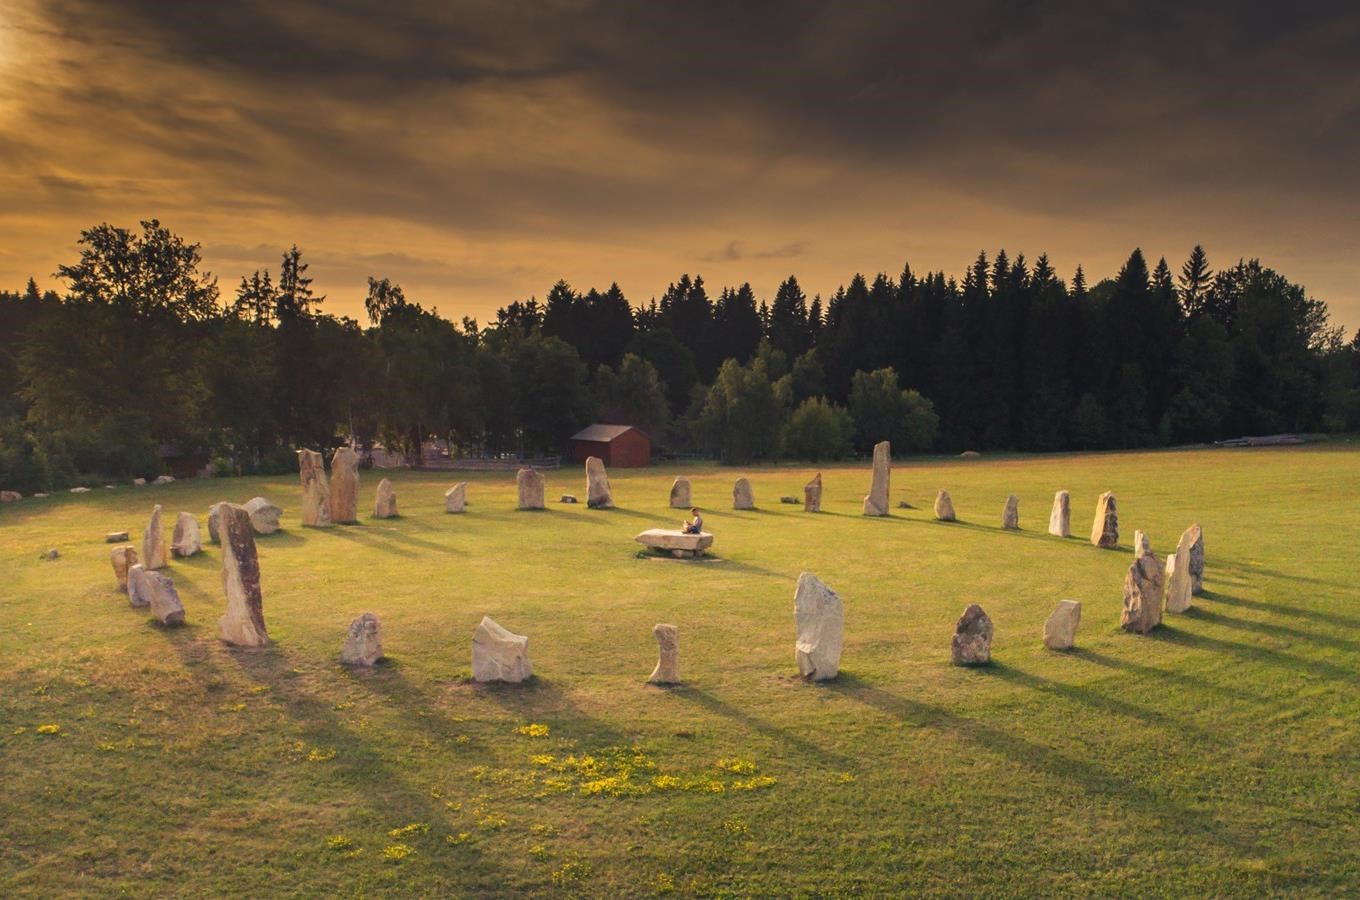 Stonehenge v resortu Svatá Kateřina - kamenný kruh druidů